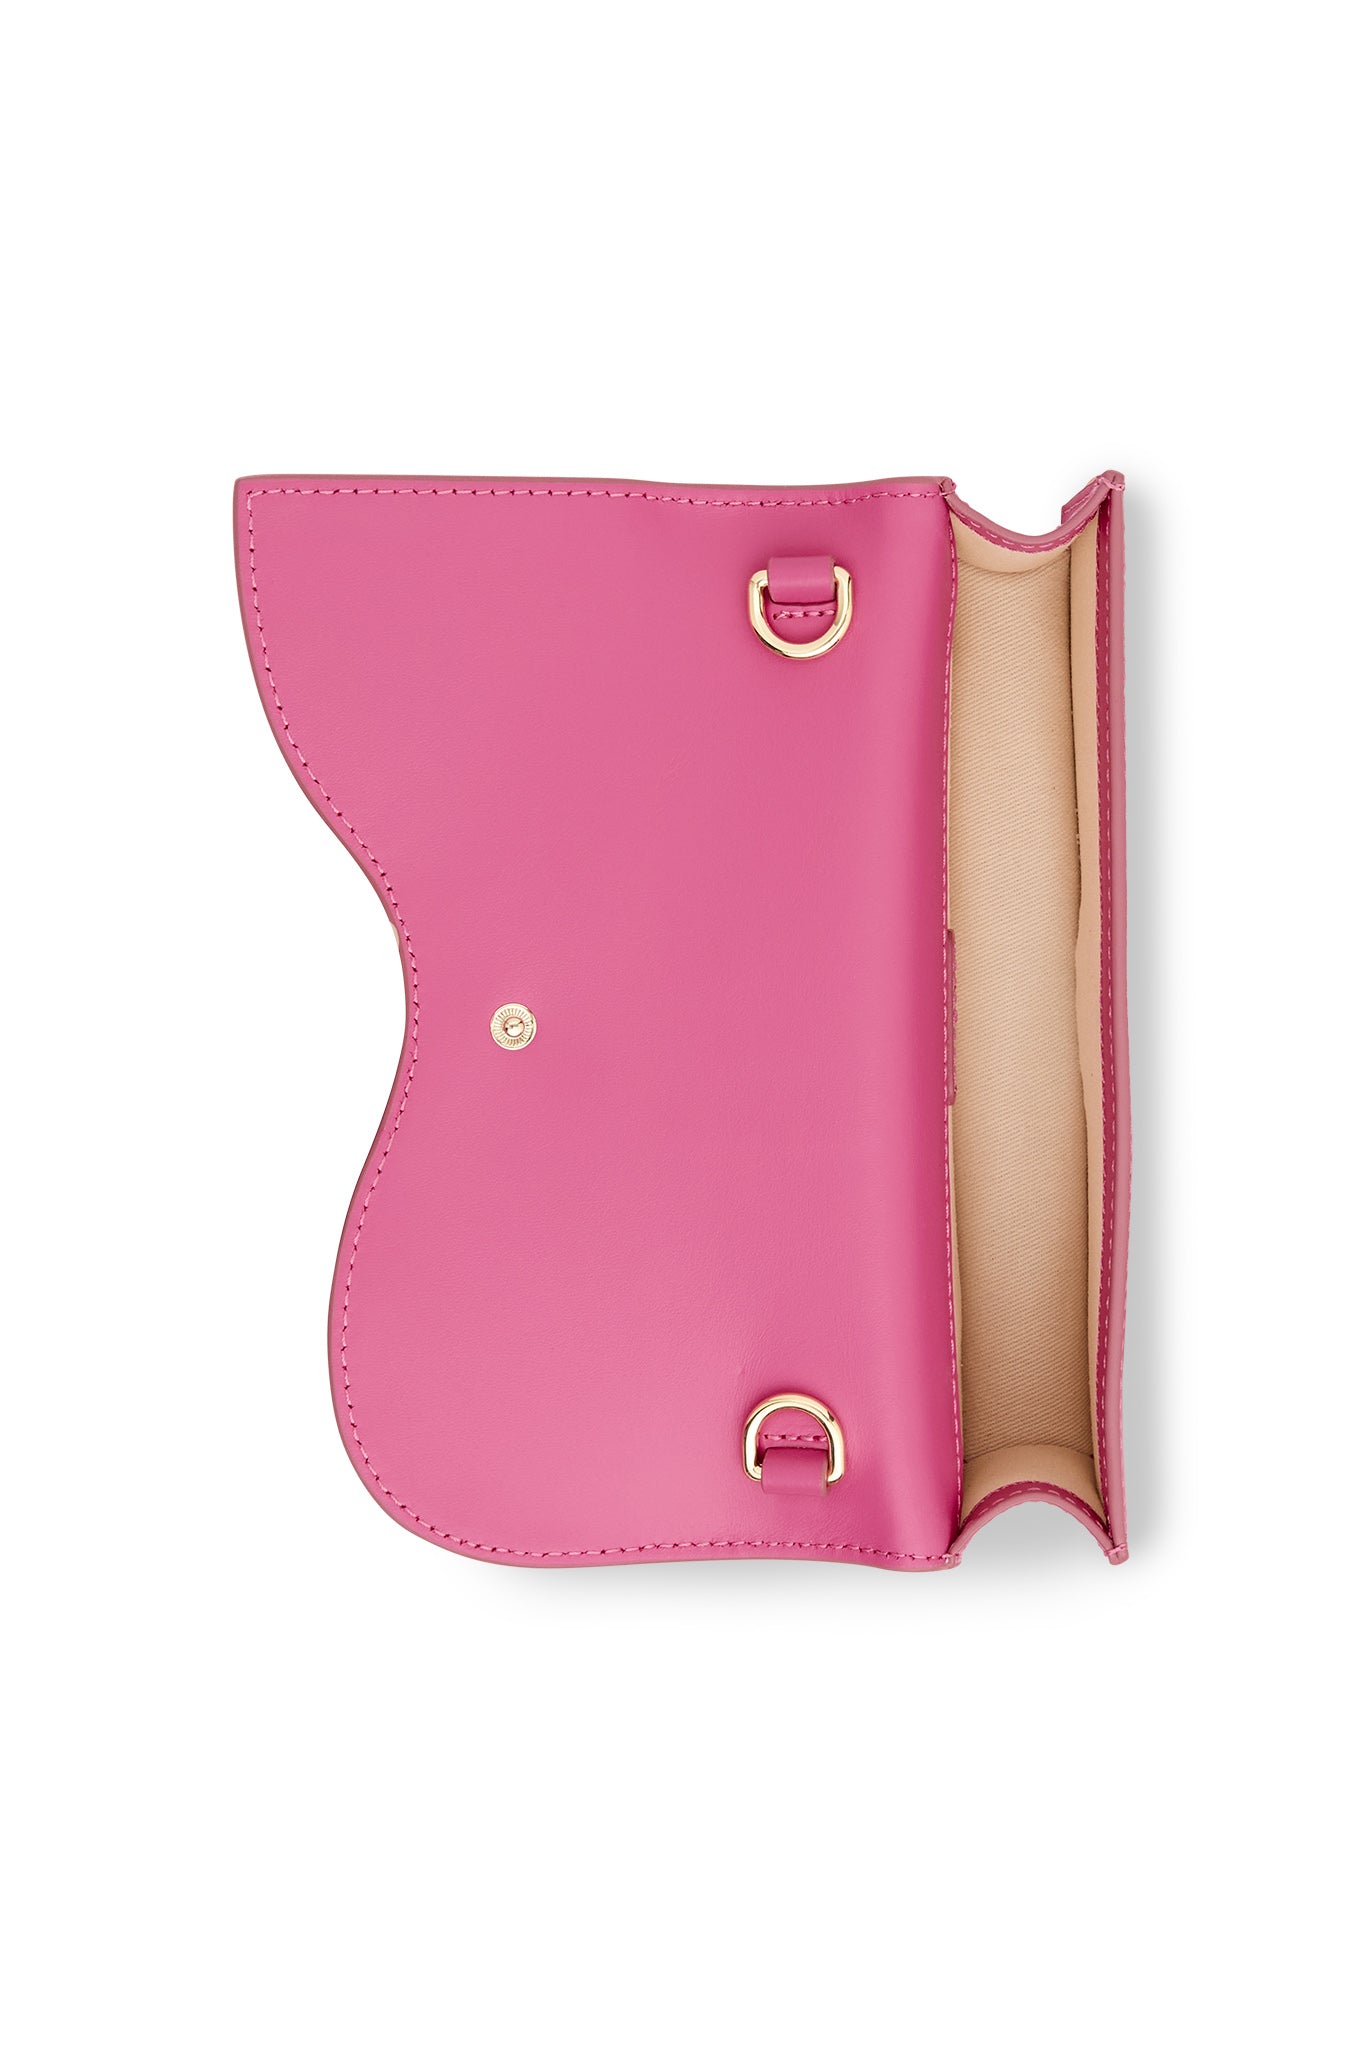 Kate Spade Nicola Faux Fur Shoulder Bag Twistlock Convertible Chain Winter  Pink